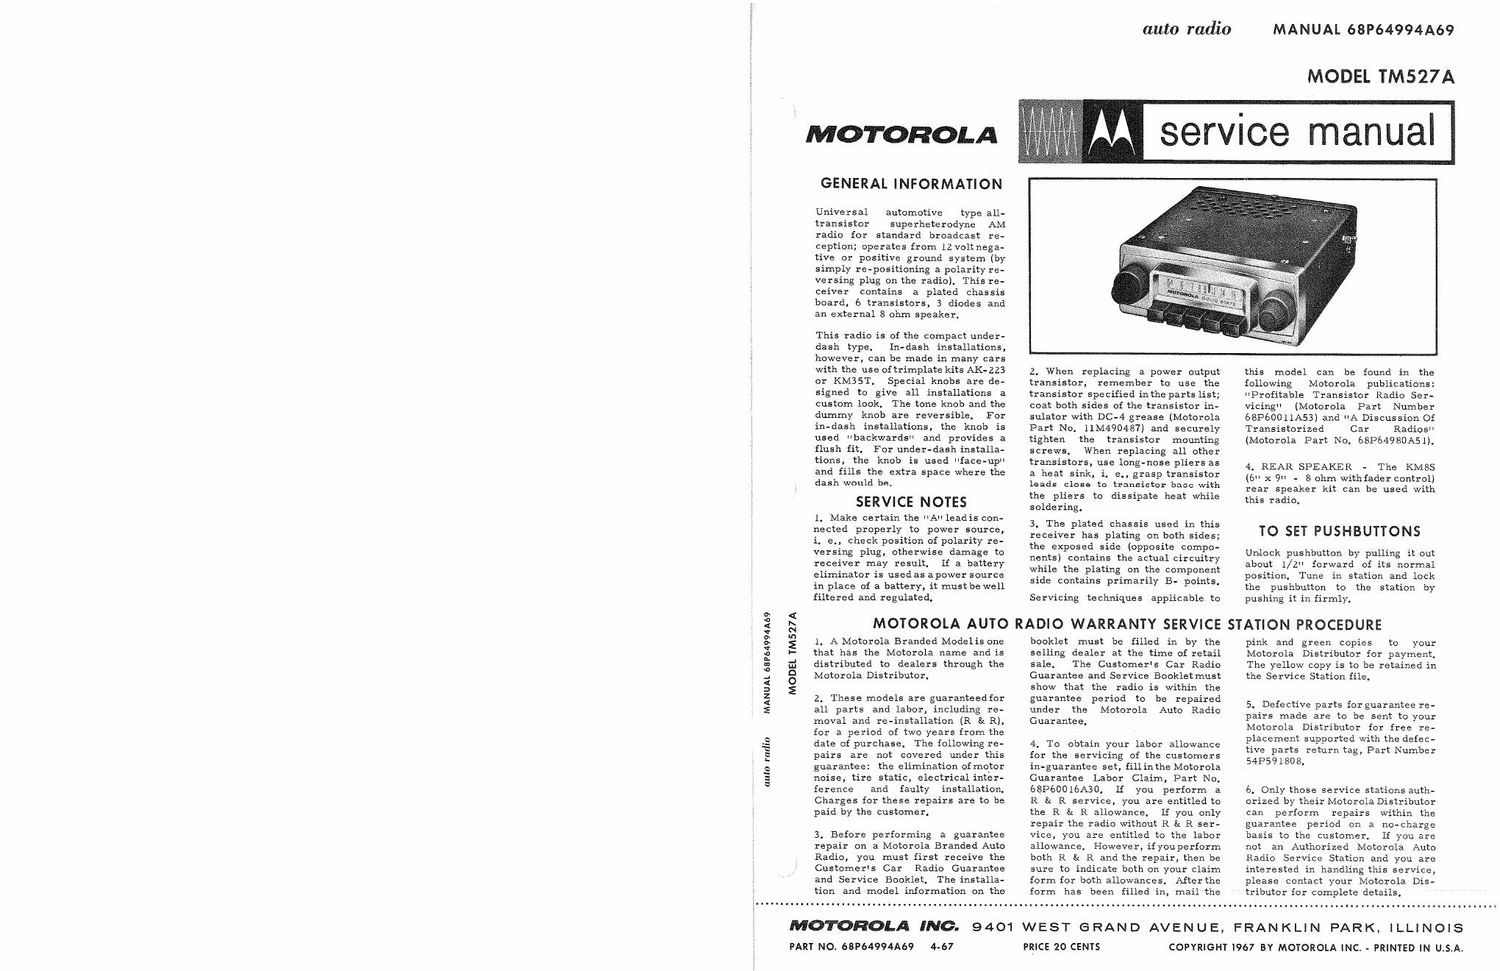 motorola tm 527 a service manual